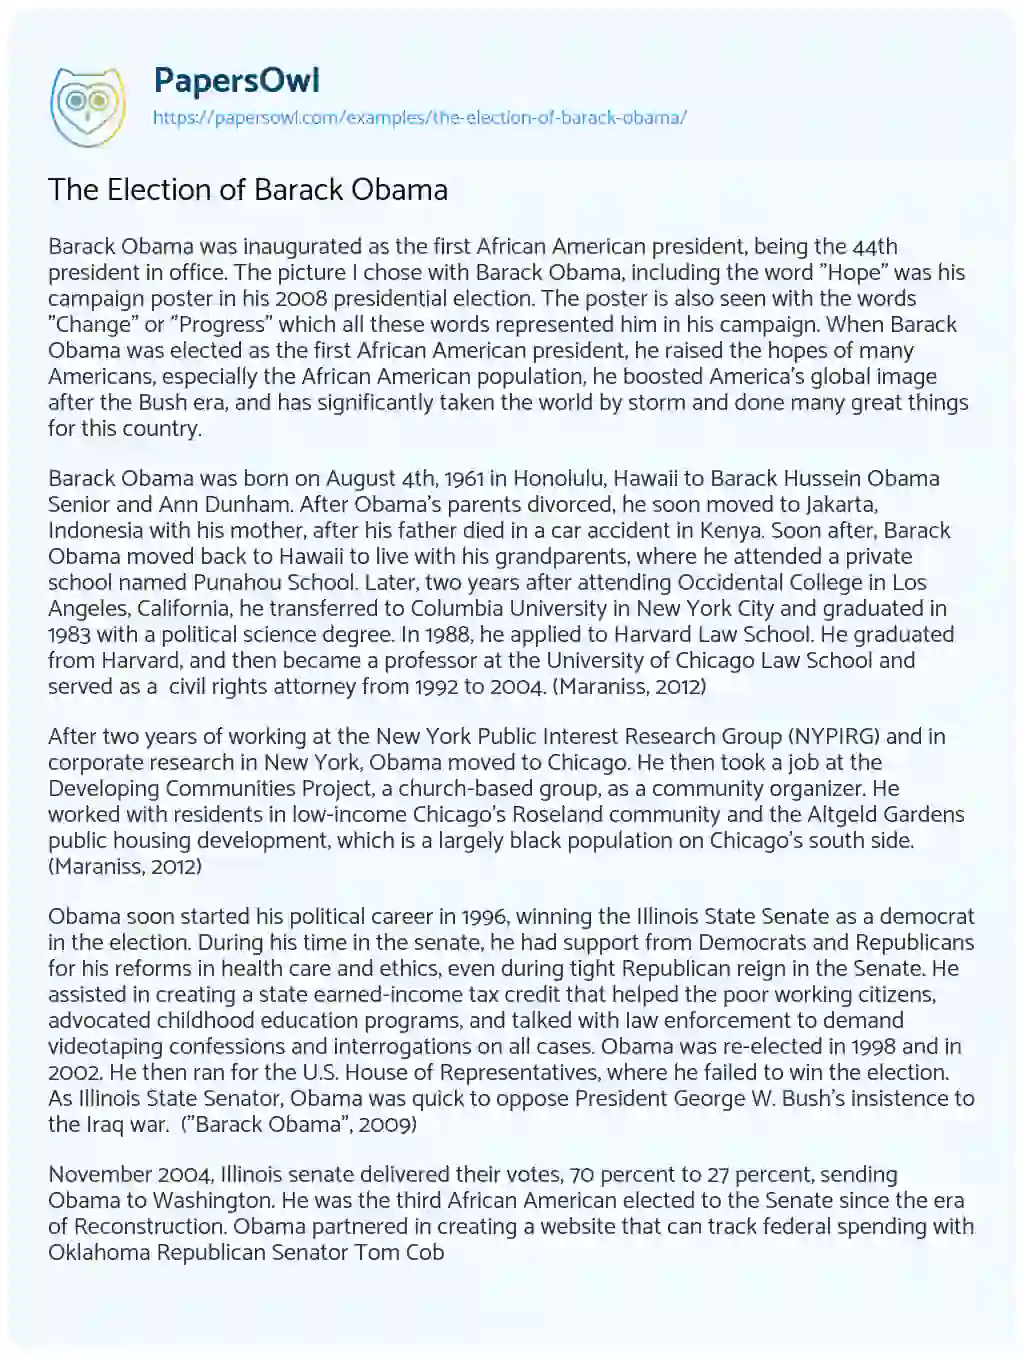 Essay on The Election of Barack Obama